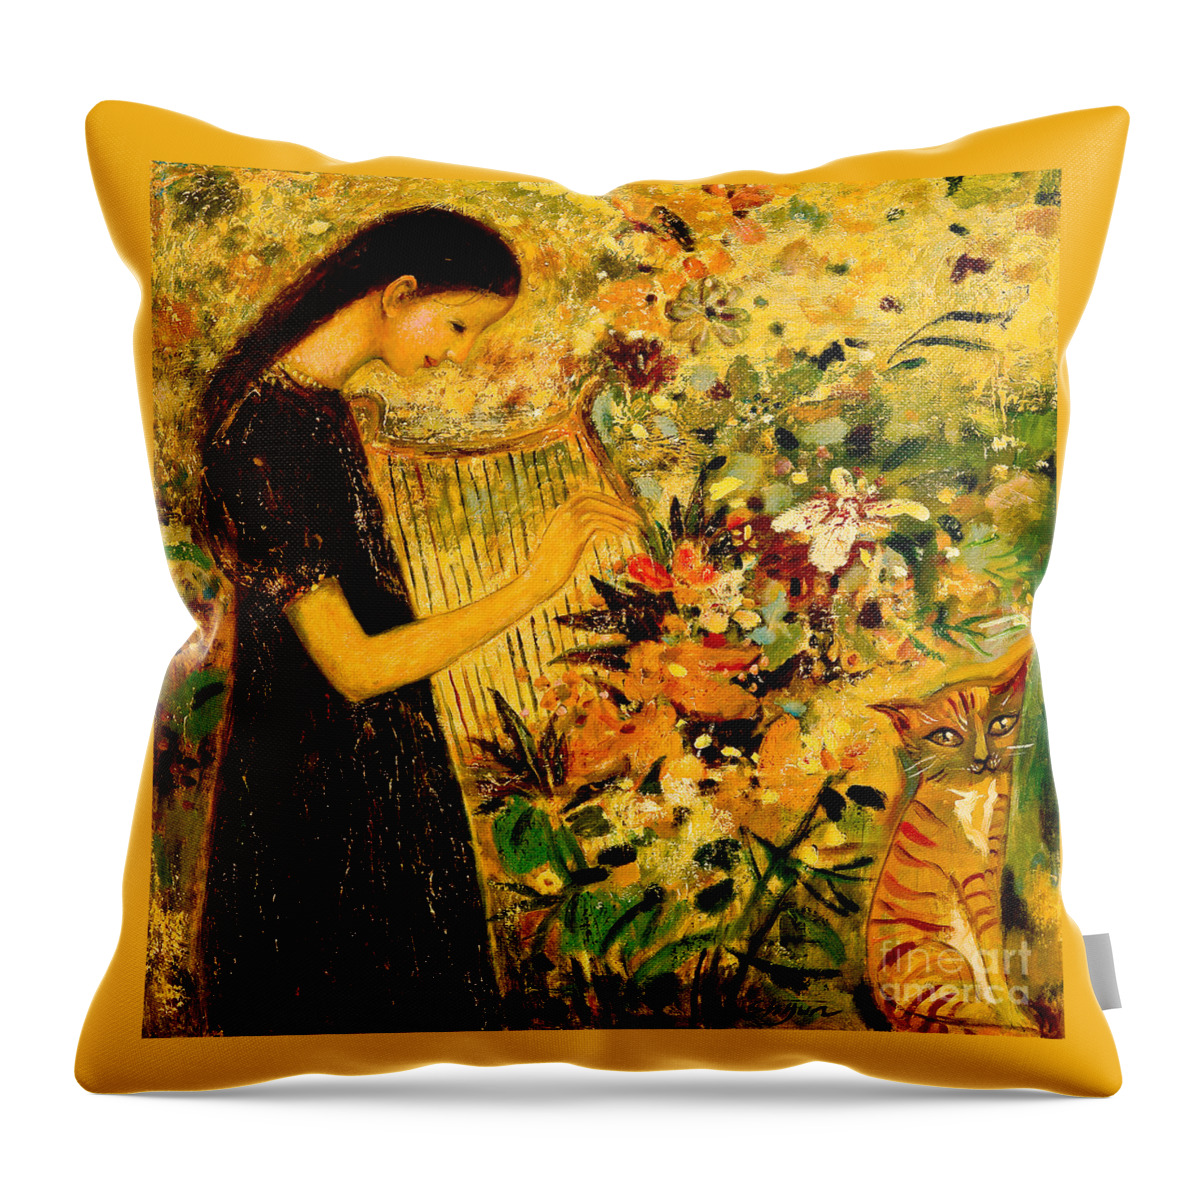 Shijun Throw Pillow featuring the painting Garden 2 by Shijun Munns